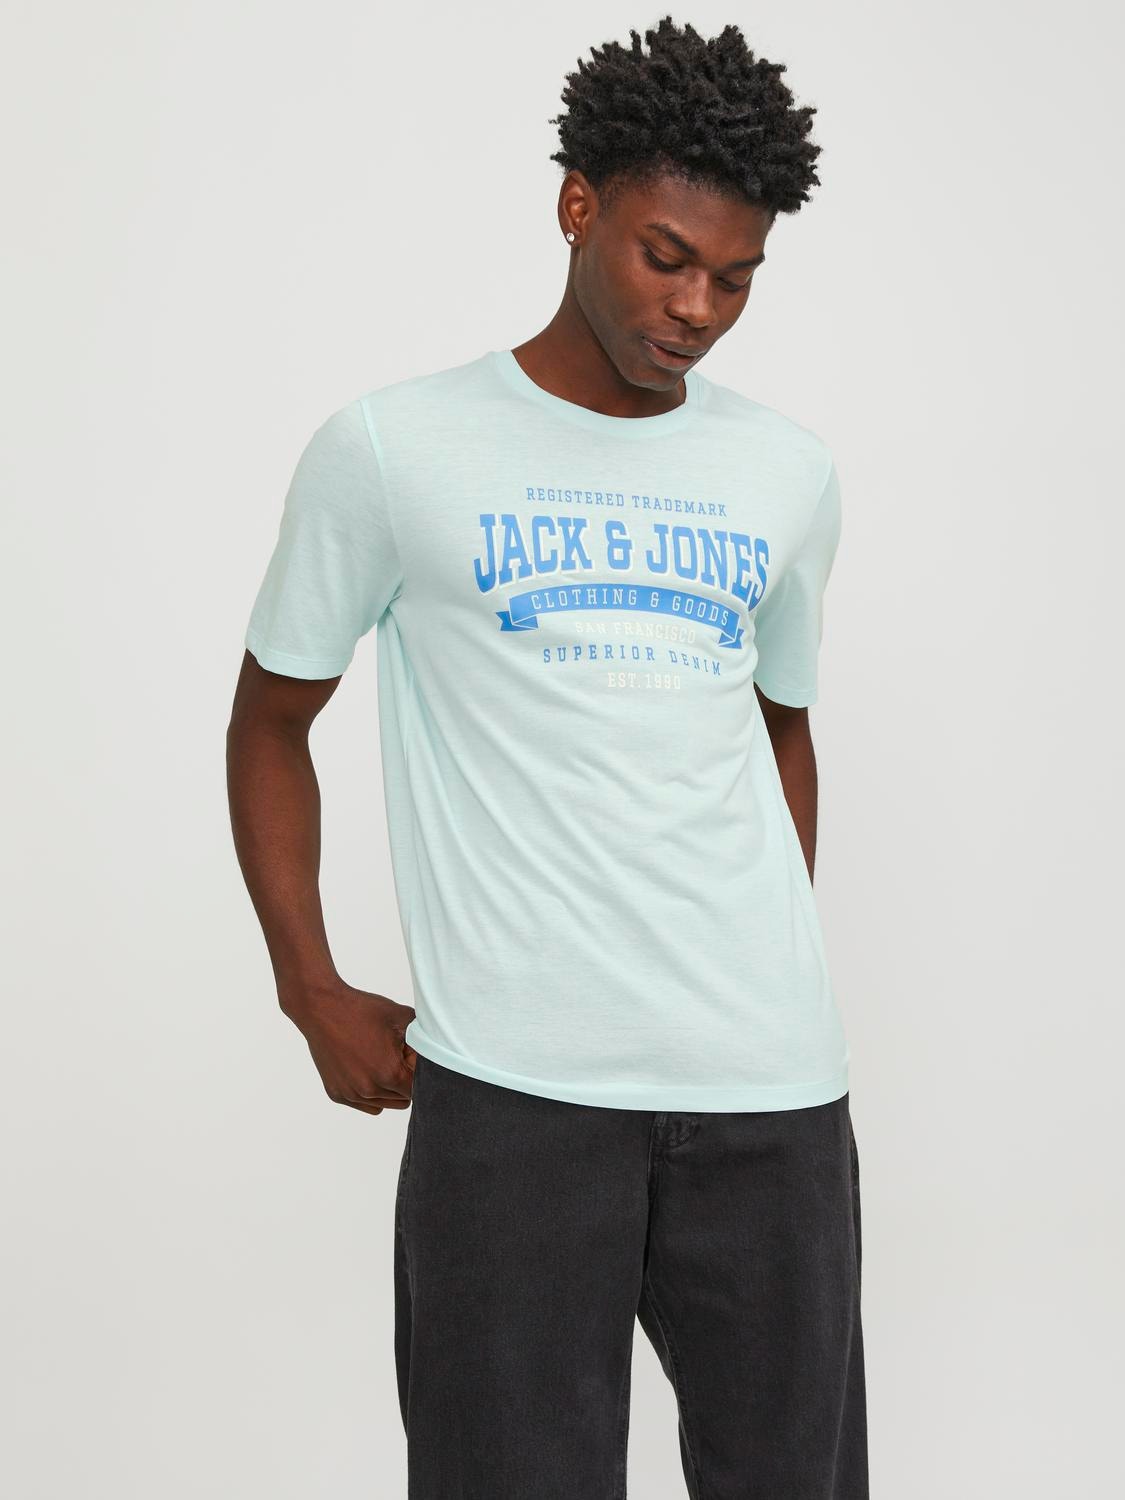 Jack & Jones Logo Crew neck T-shirt -Soothing Sea - 12246690